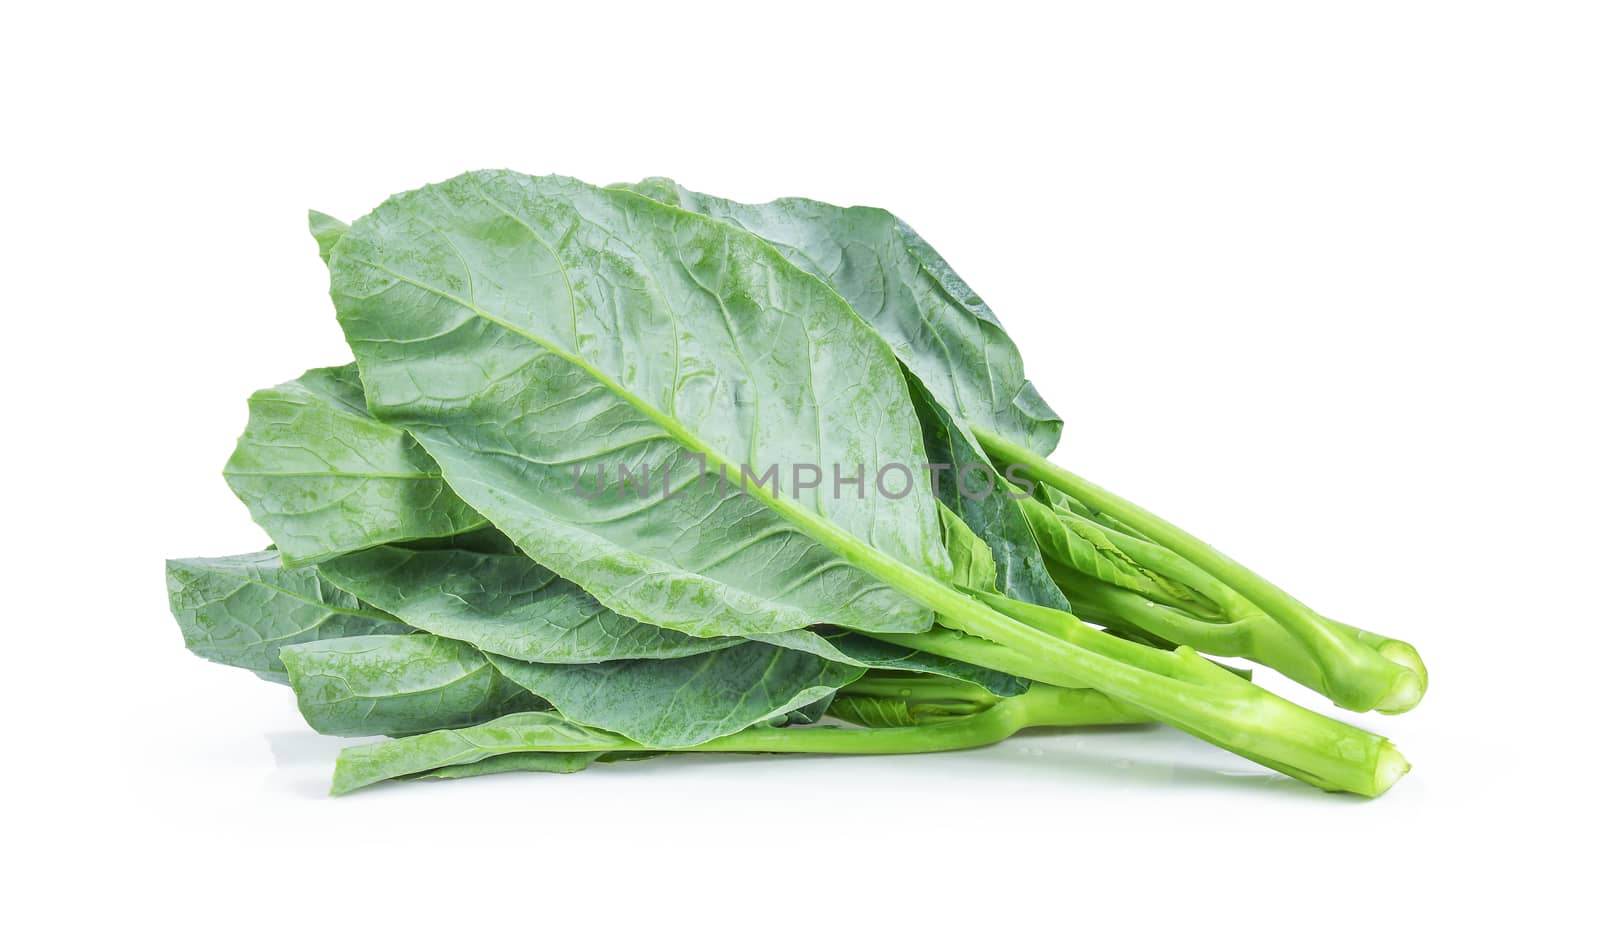 Chinese kale vegetable isolated on white background